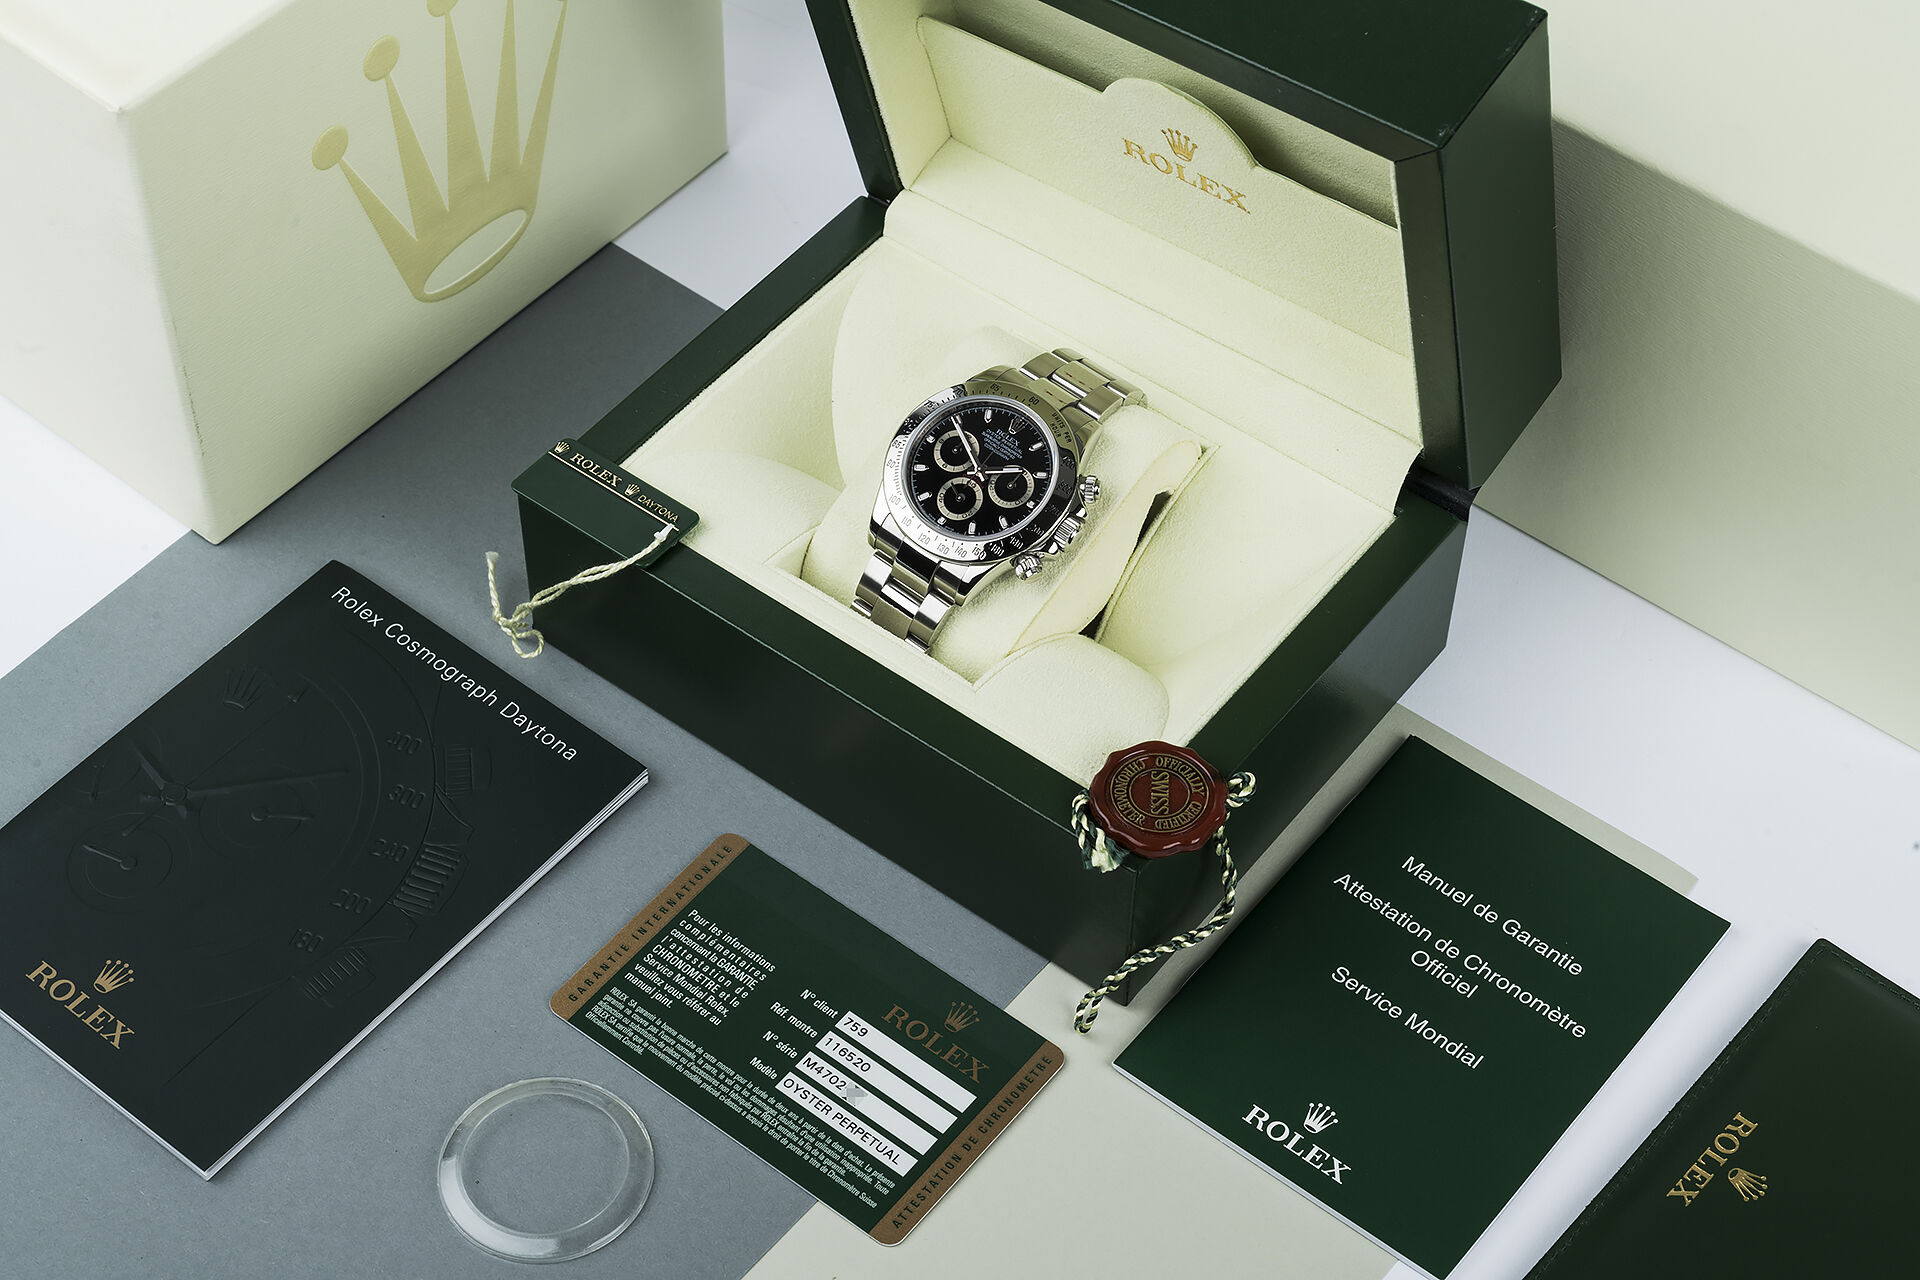 ref 116520 | Box & Certificate | Rolex Cosmograph Daytona